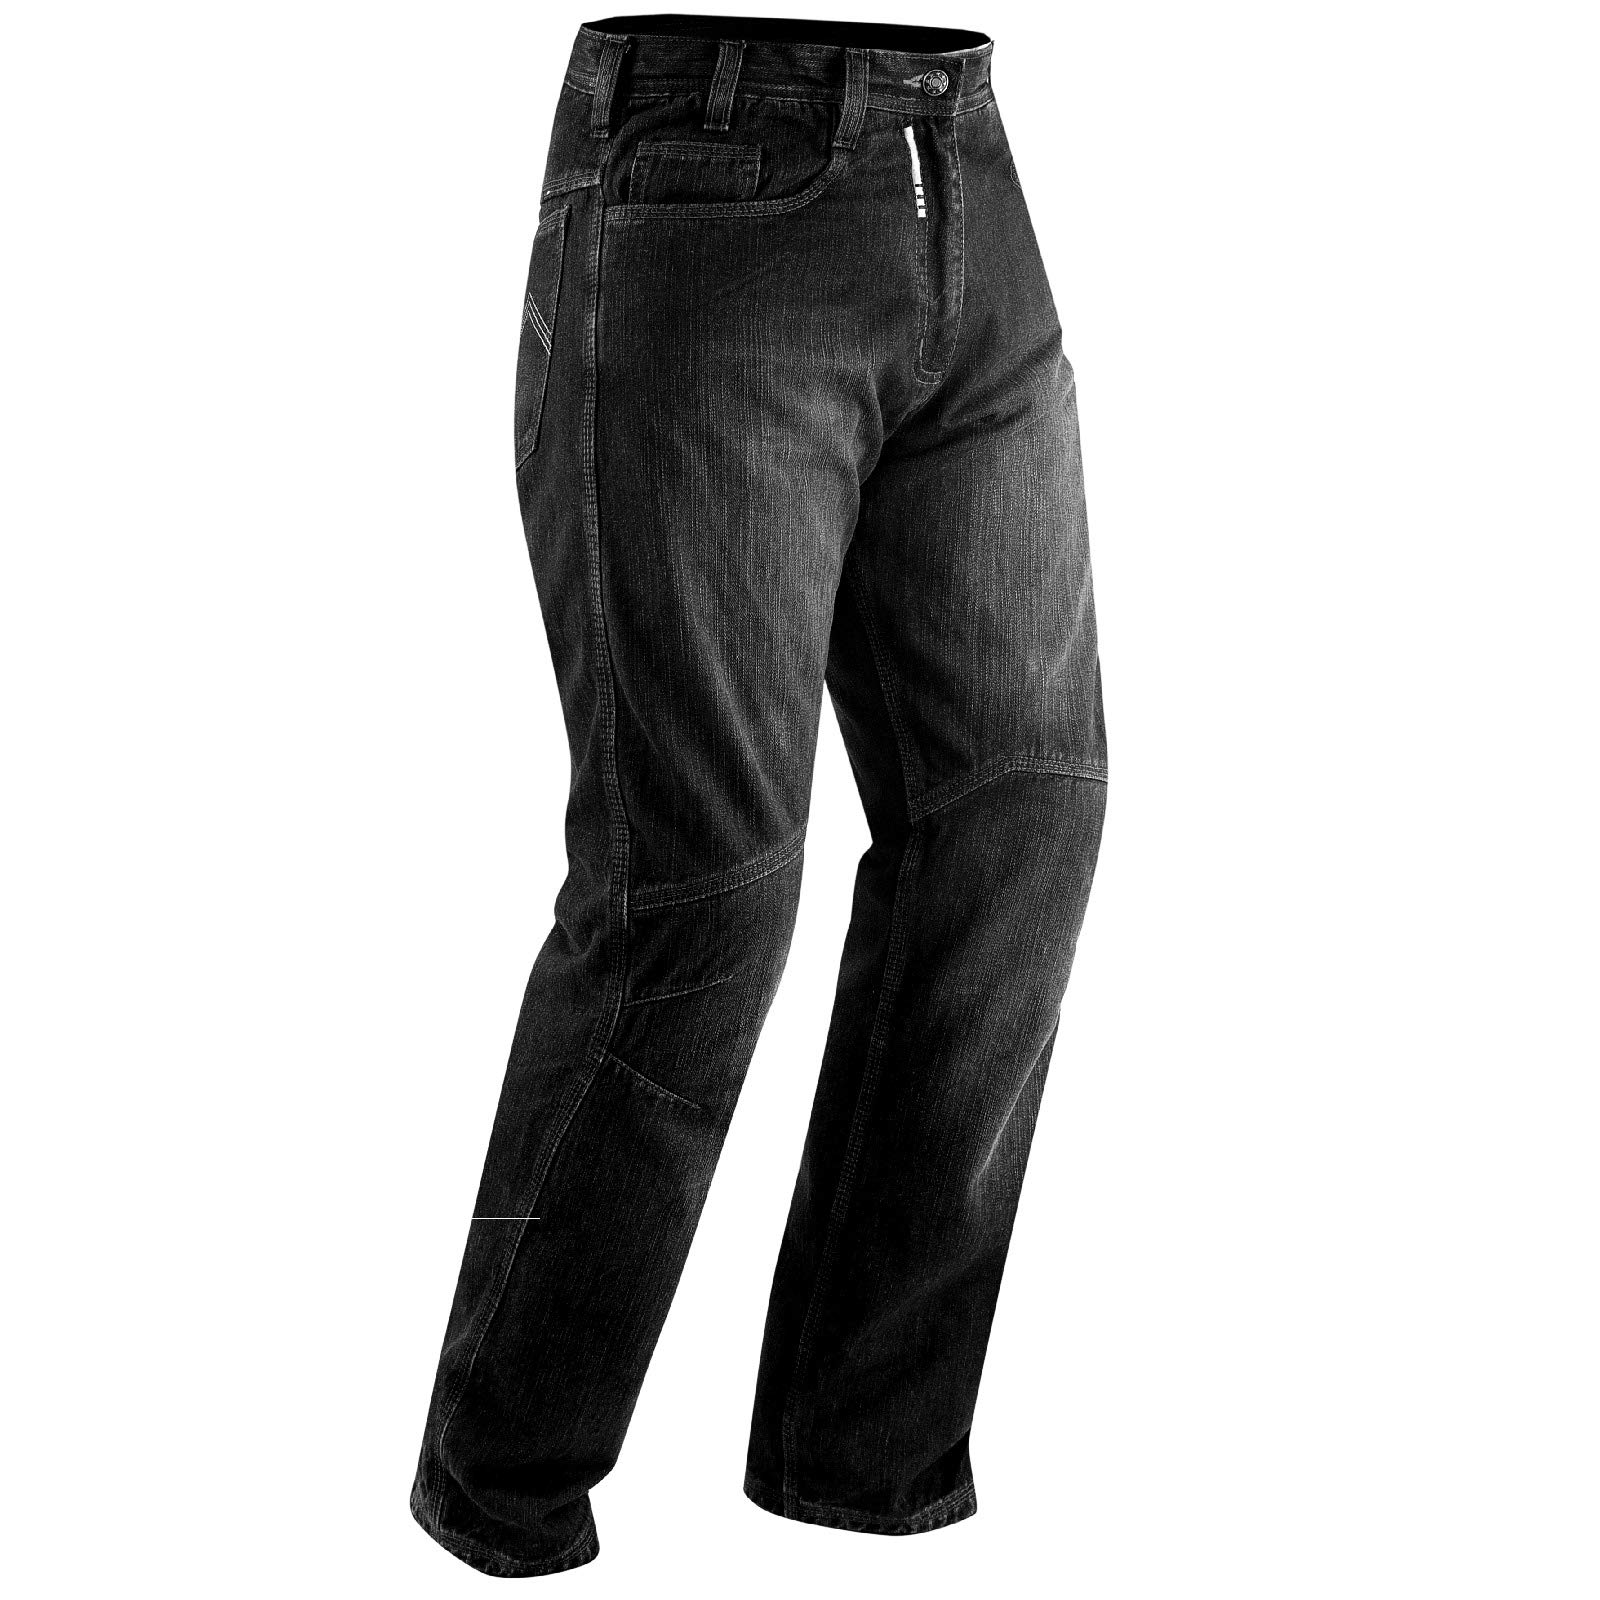 A-Pro Jeans CE Protektoren Motorrad Stil Roller Quad Hose Denim Textilhose Schwarz 42 von A-Pro